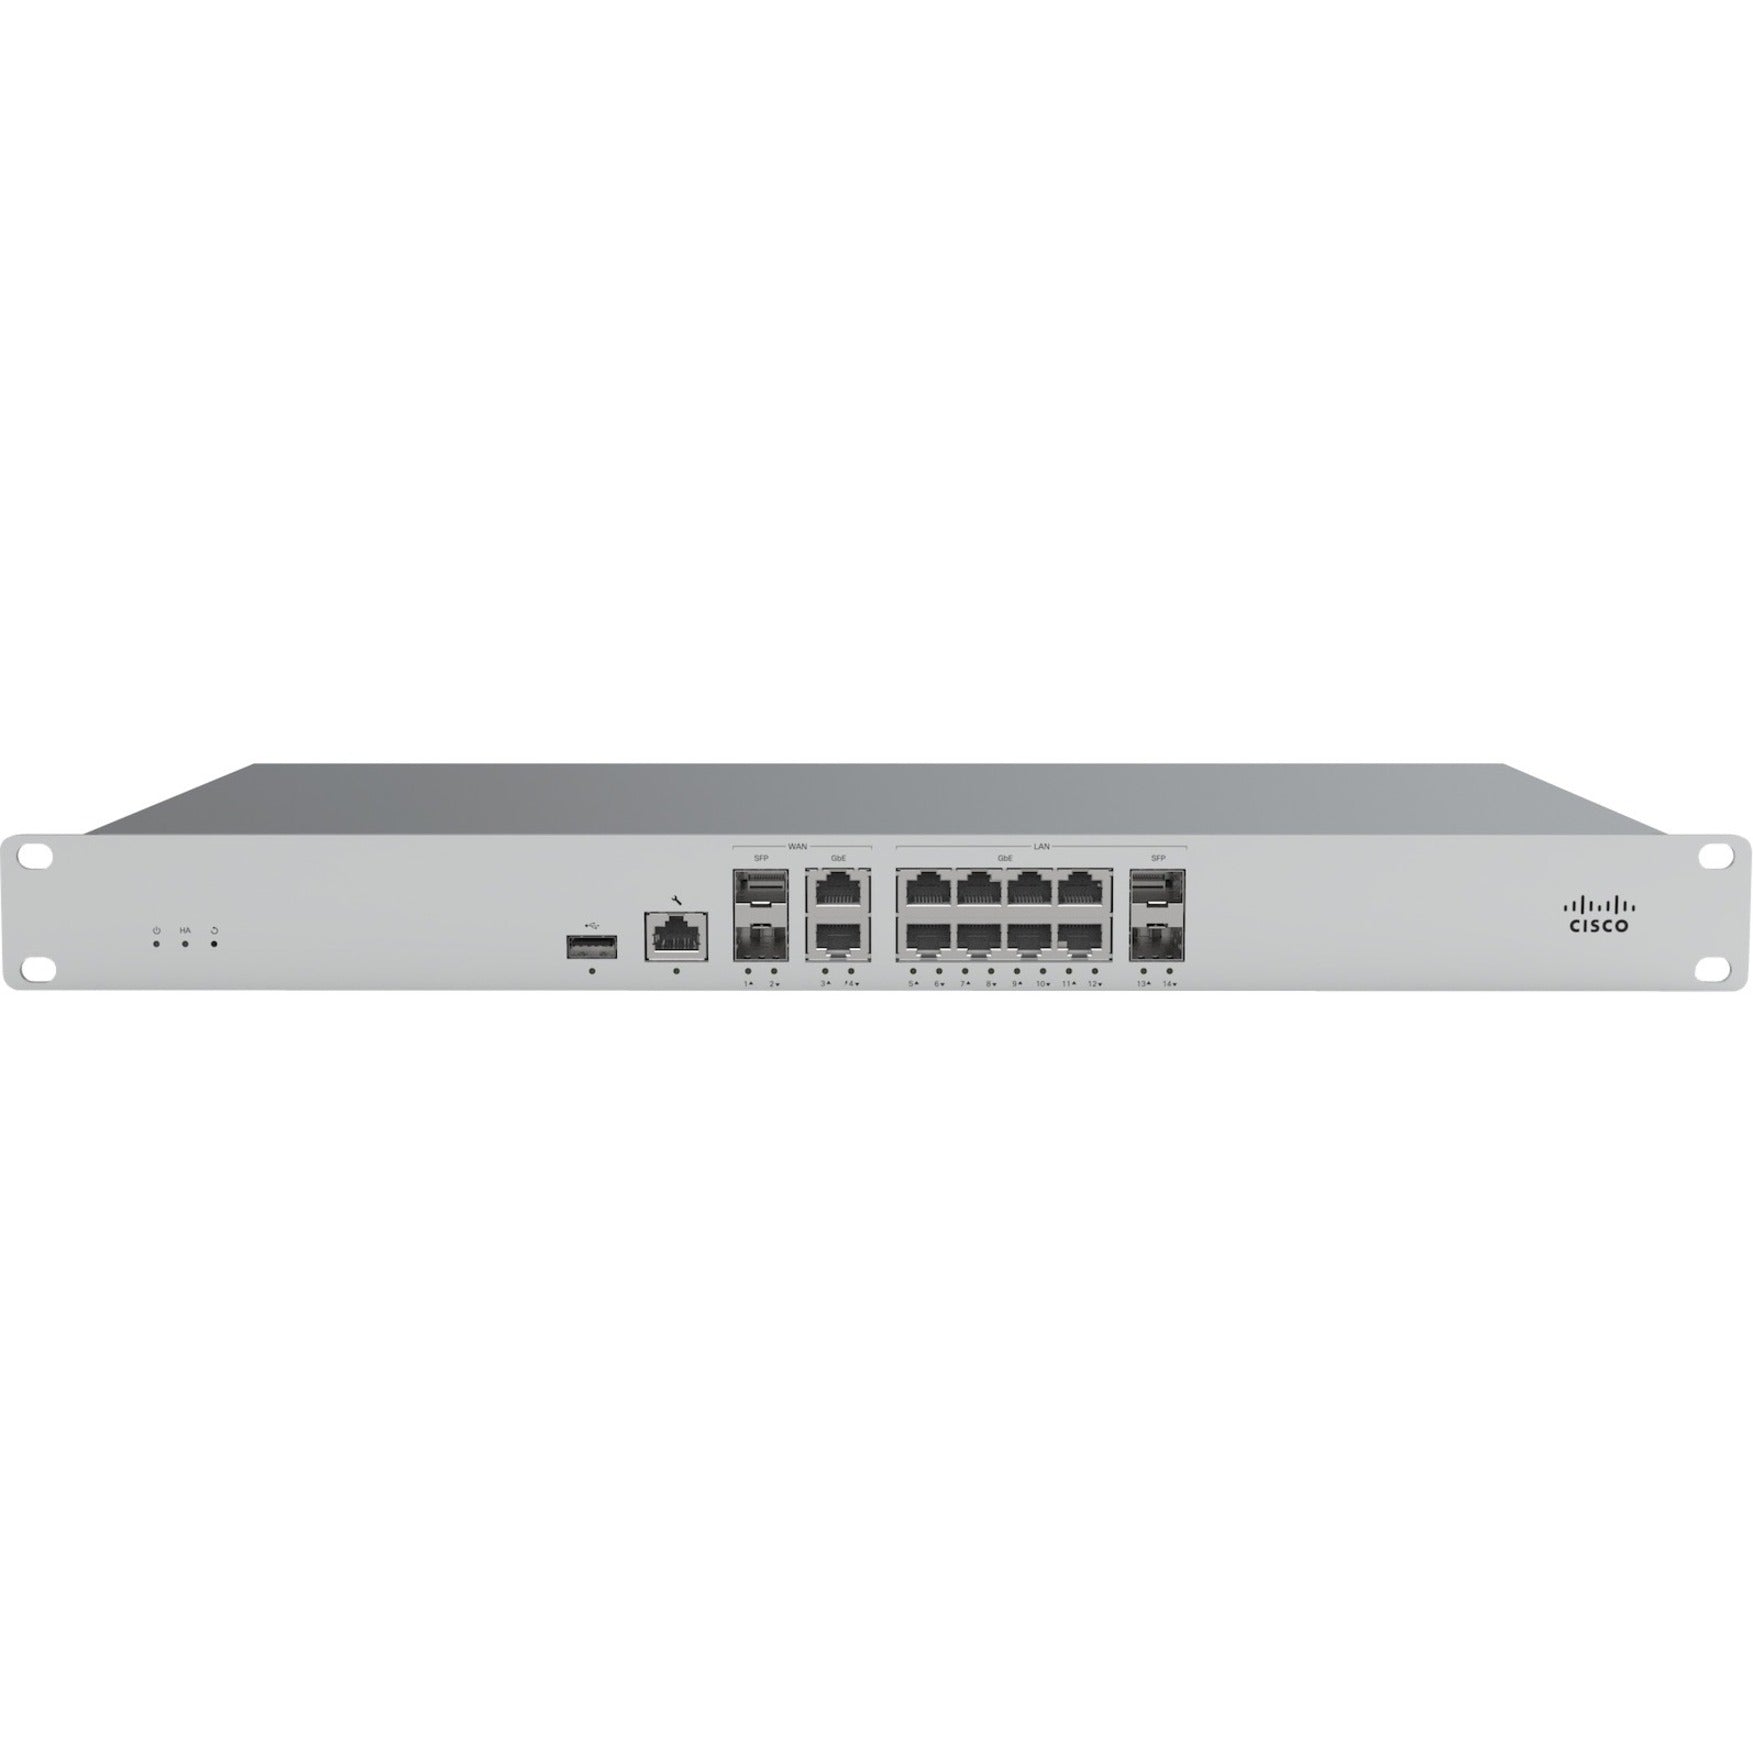 Meraki MX85 Network Security/Firewall Appliance (MX85-HW)